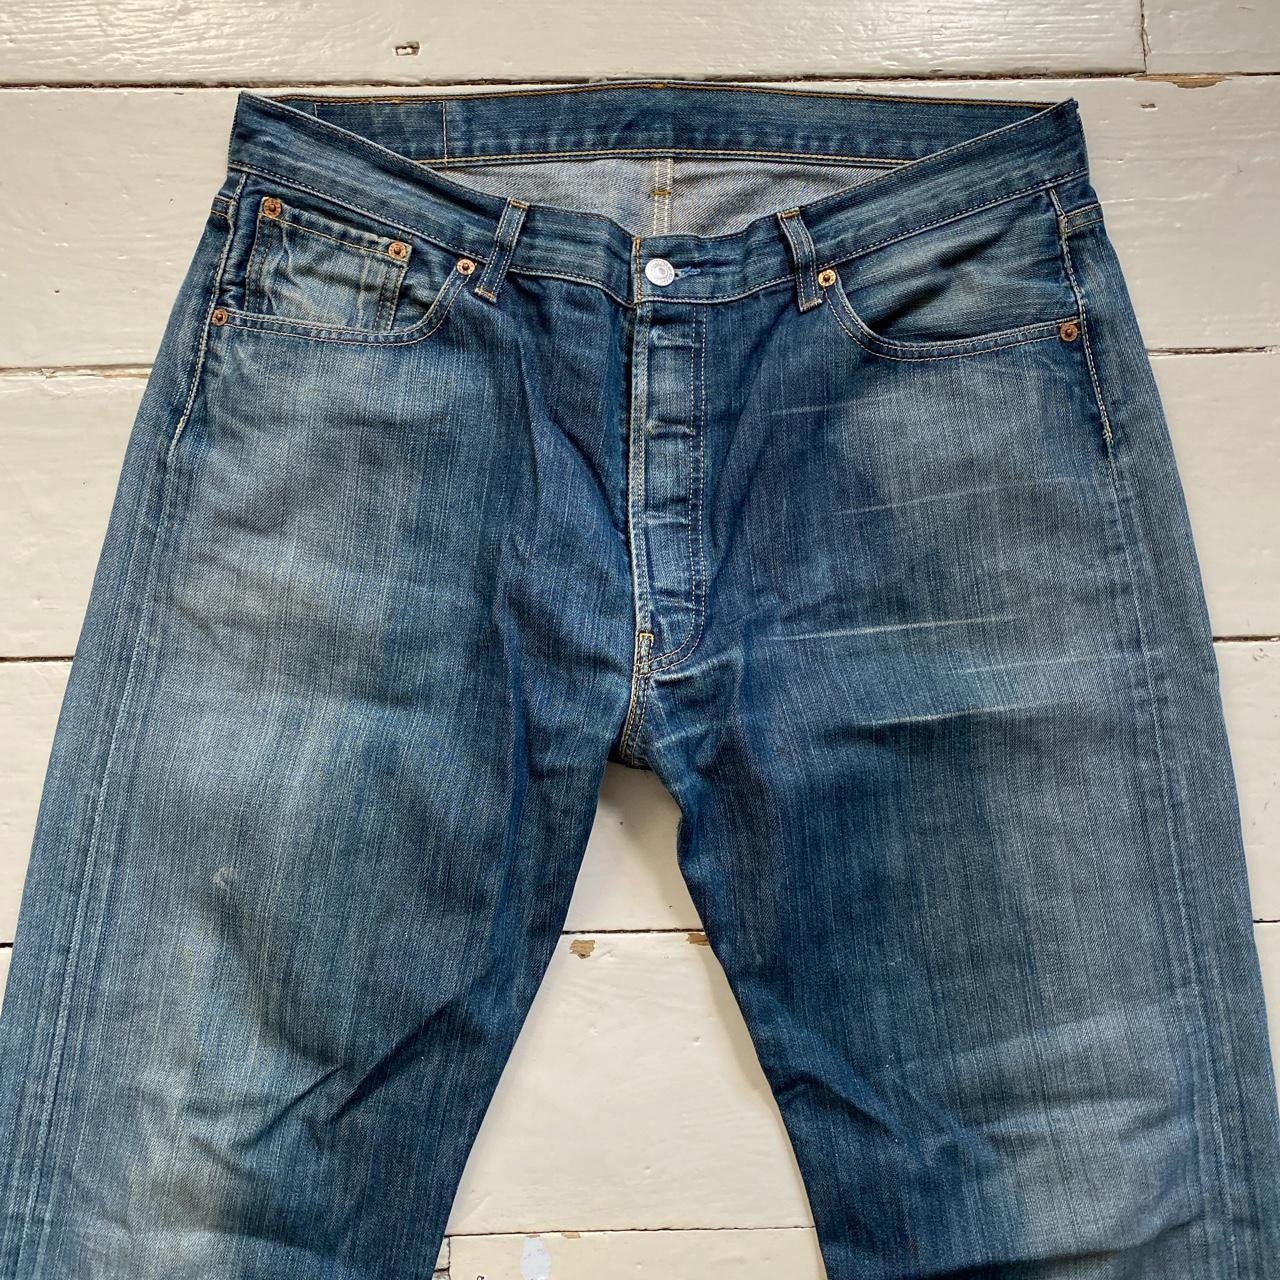 Levis 501 Stonewashed Jeans (38/31)